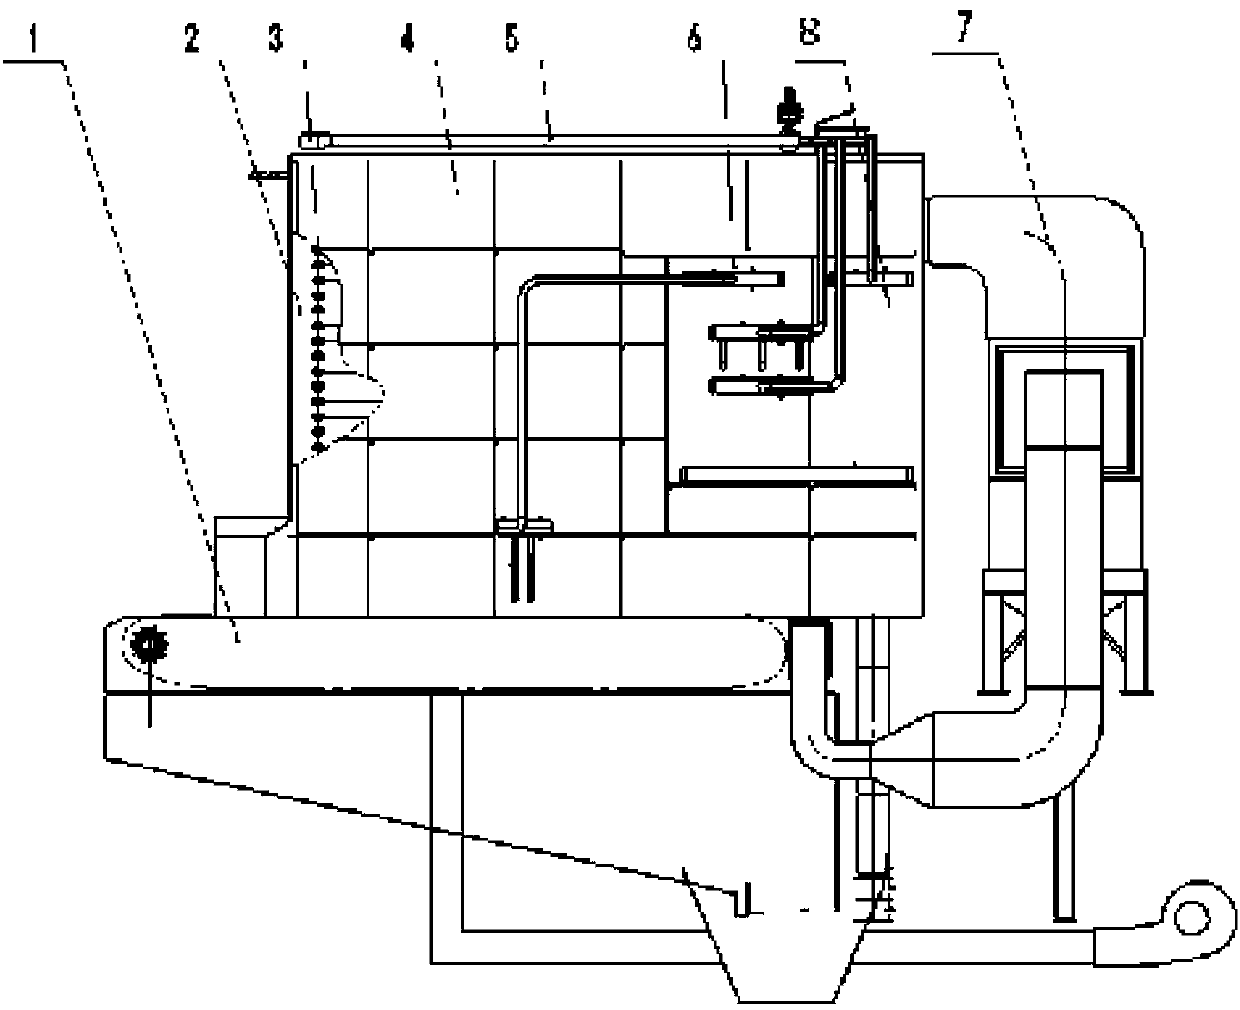 Oil field fuel coal steam-injection boiler